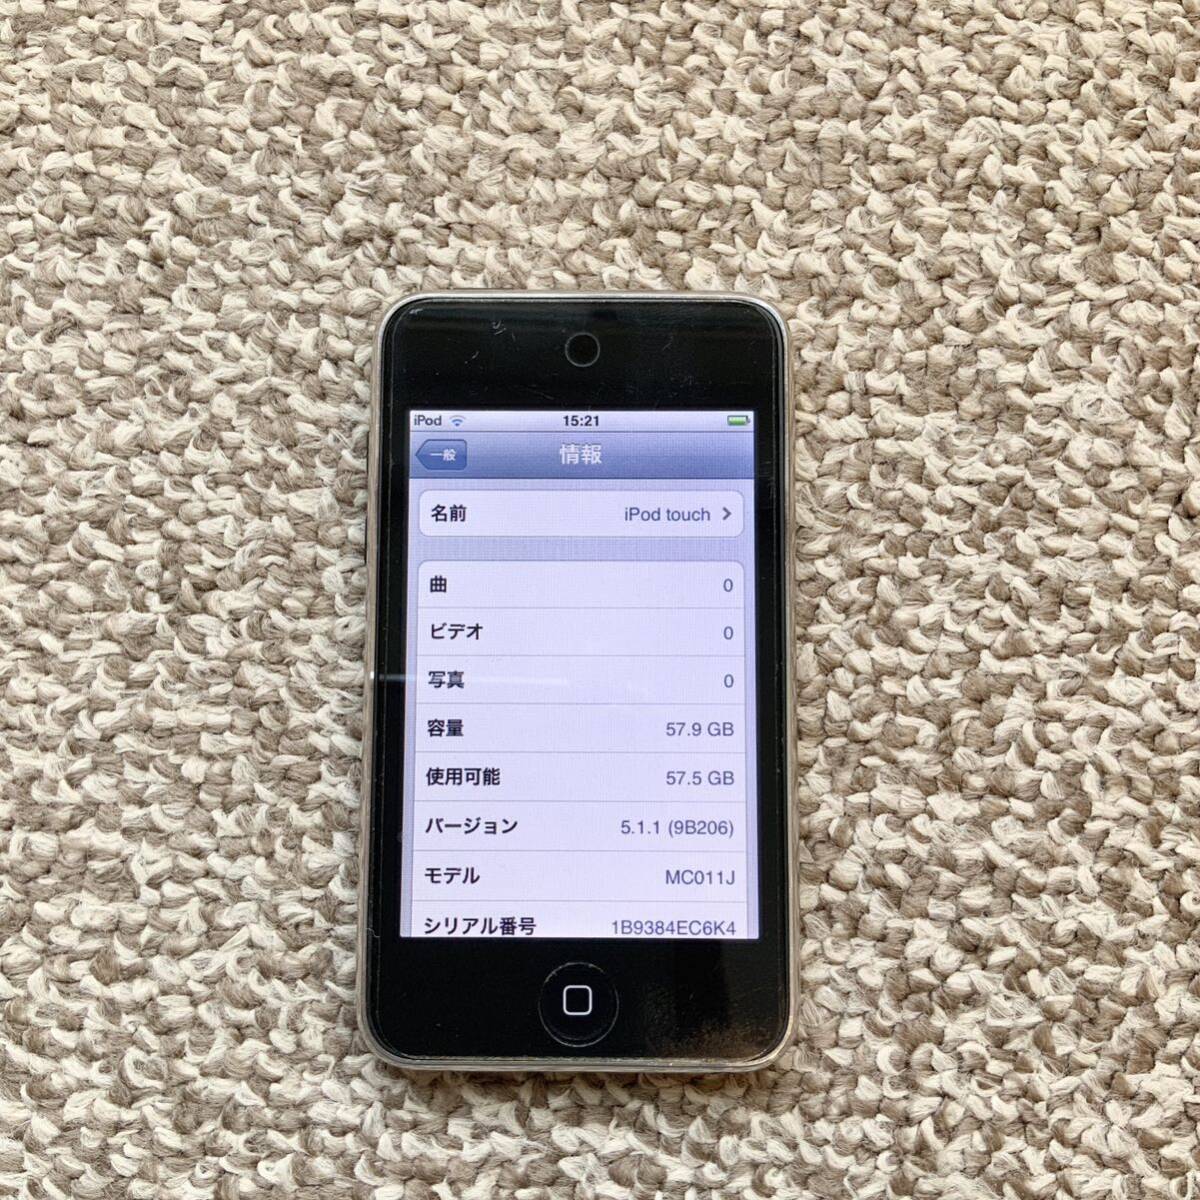 [ бесплатная доставка ]iPod touch no. 3 поколение 64GB A1318 Apple Apple iPod Touch корпус 